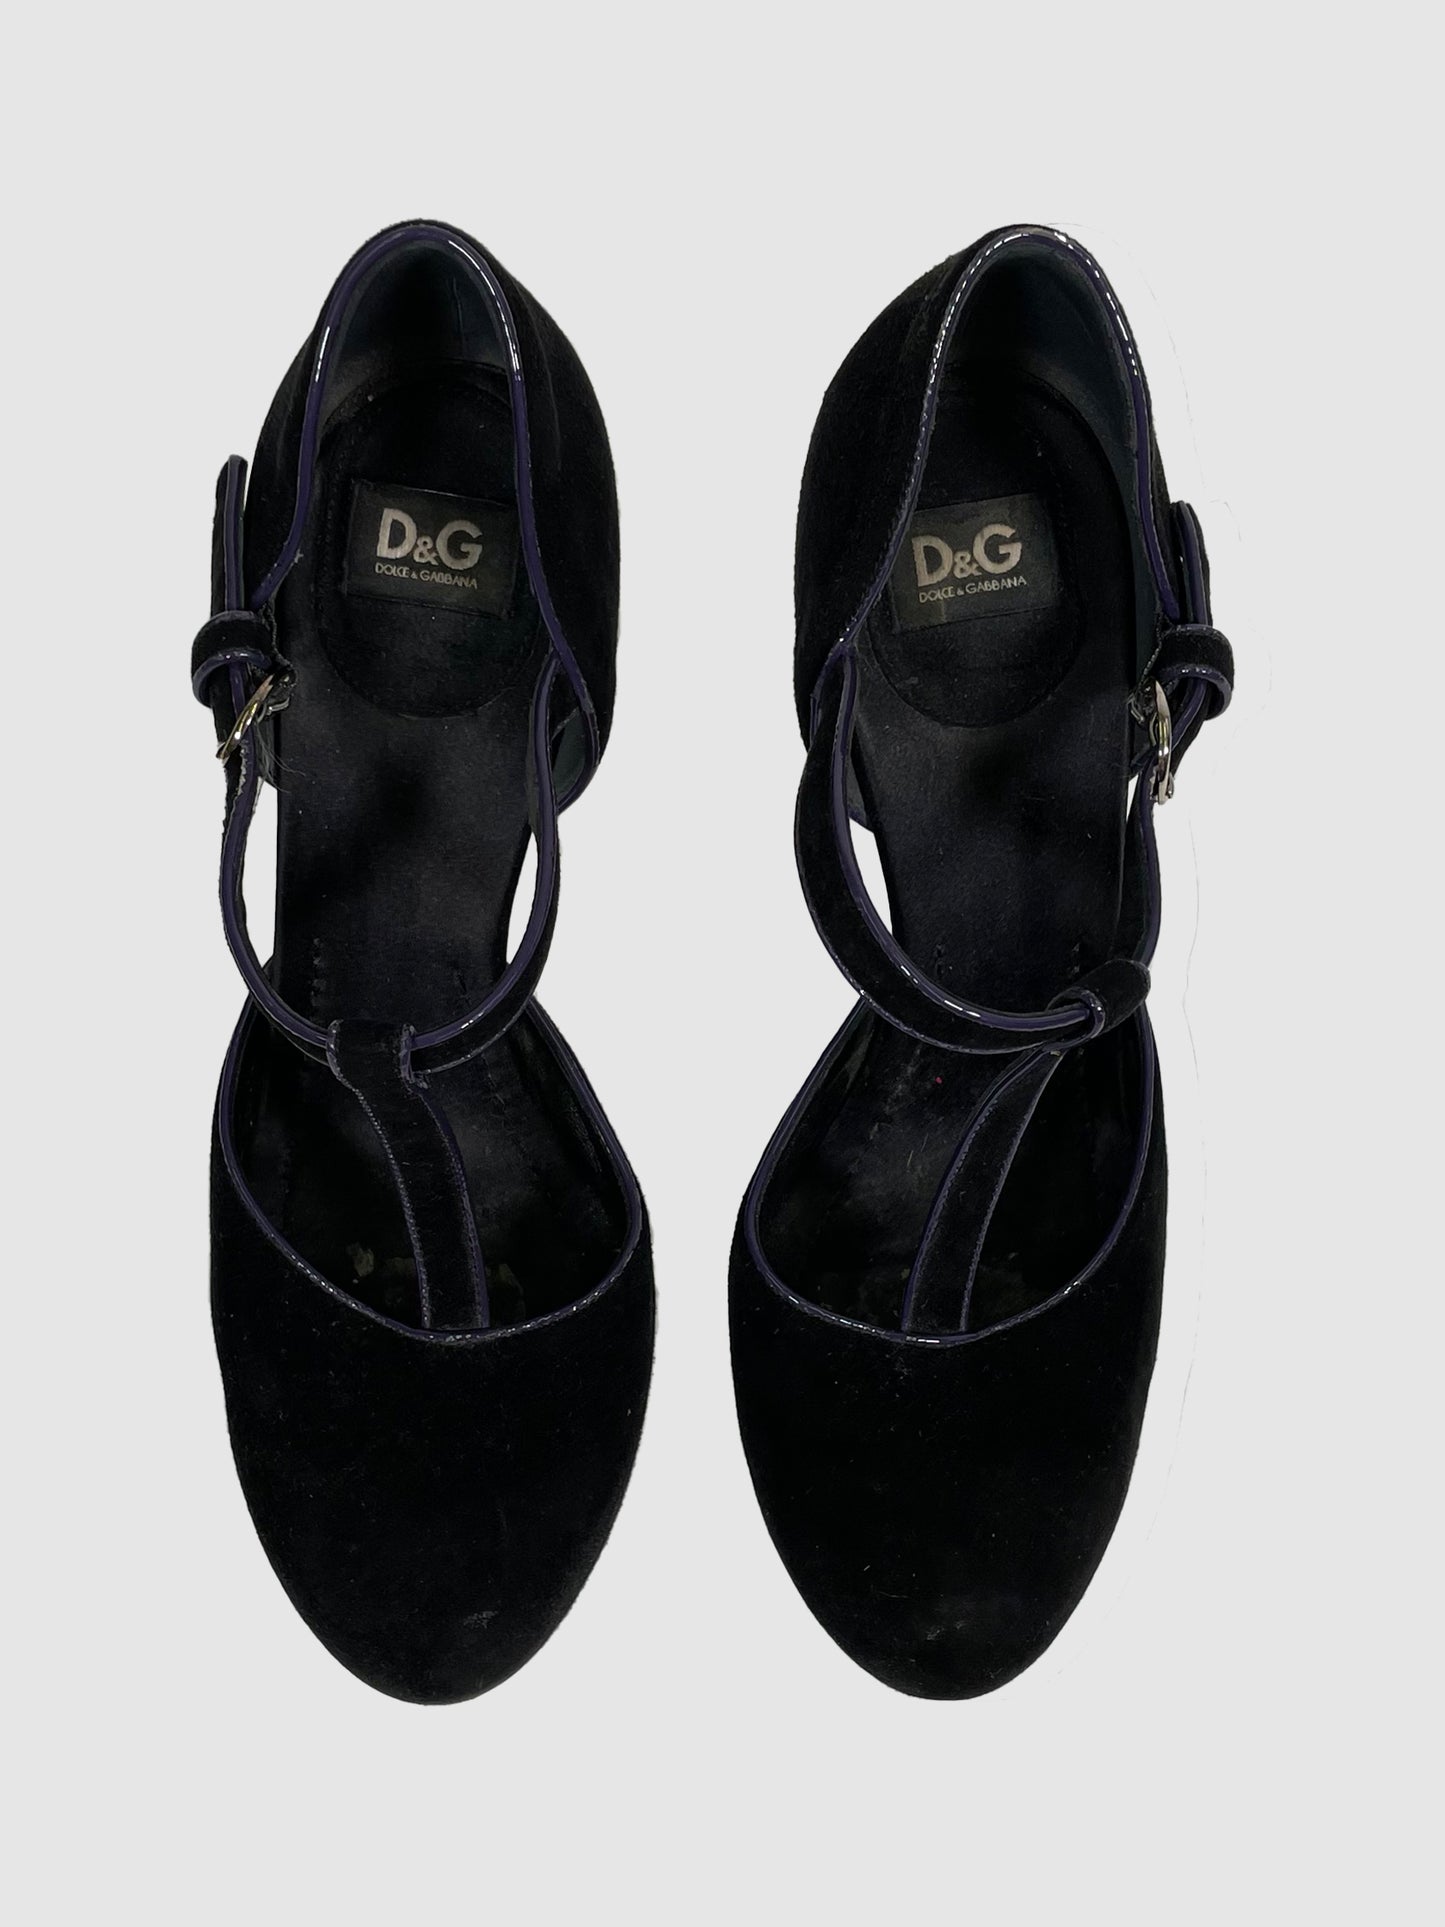 Dolce & Gabbana Suede Pumps - Size 39